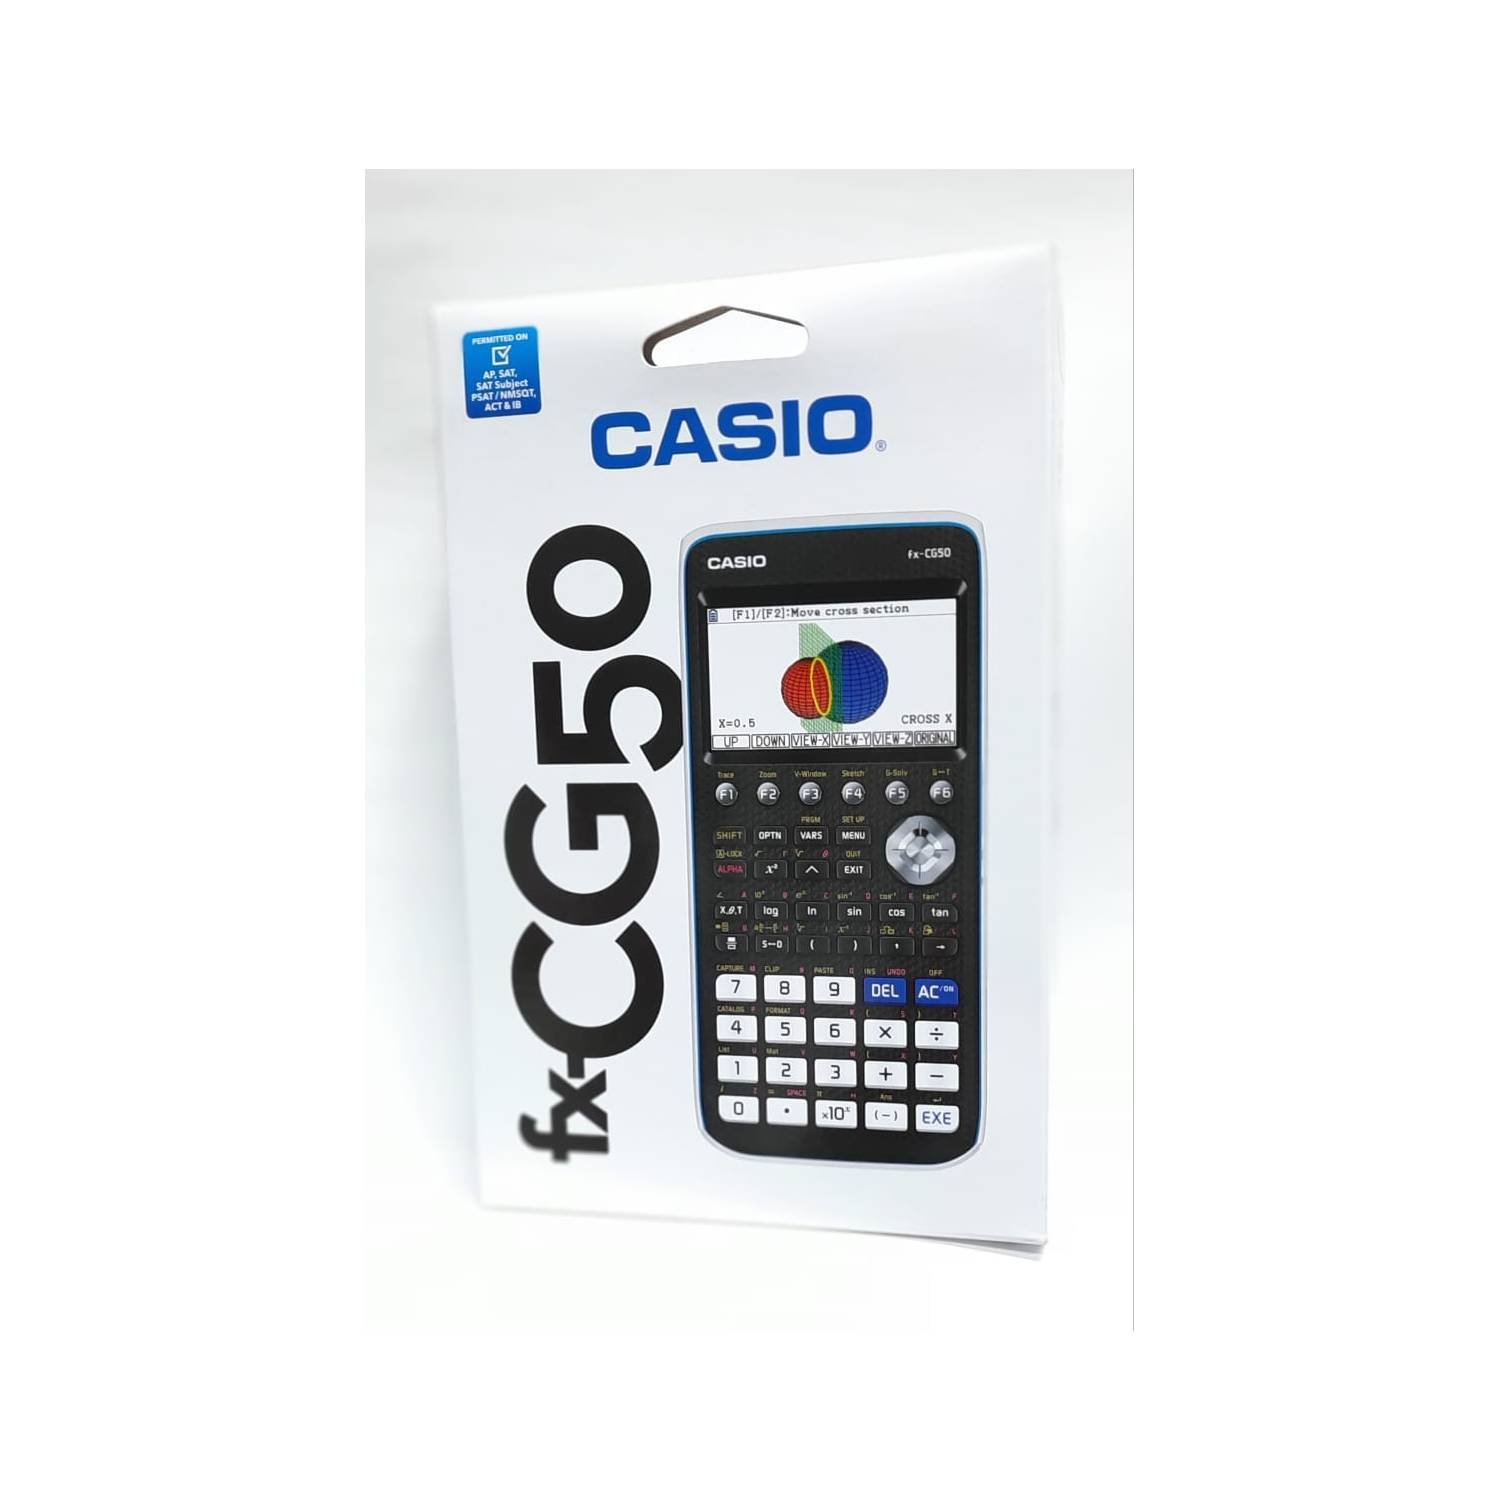 Calculadora FX-CG50 CASIO falabella.com